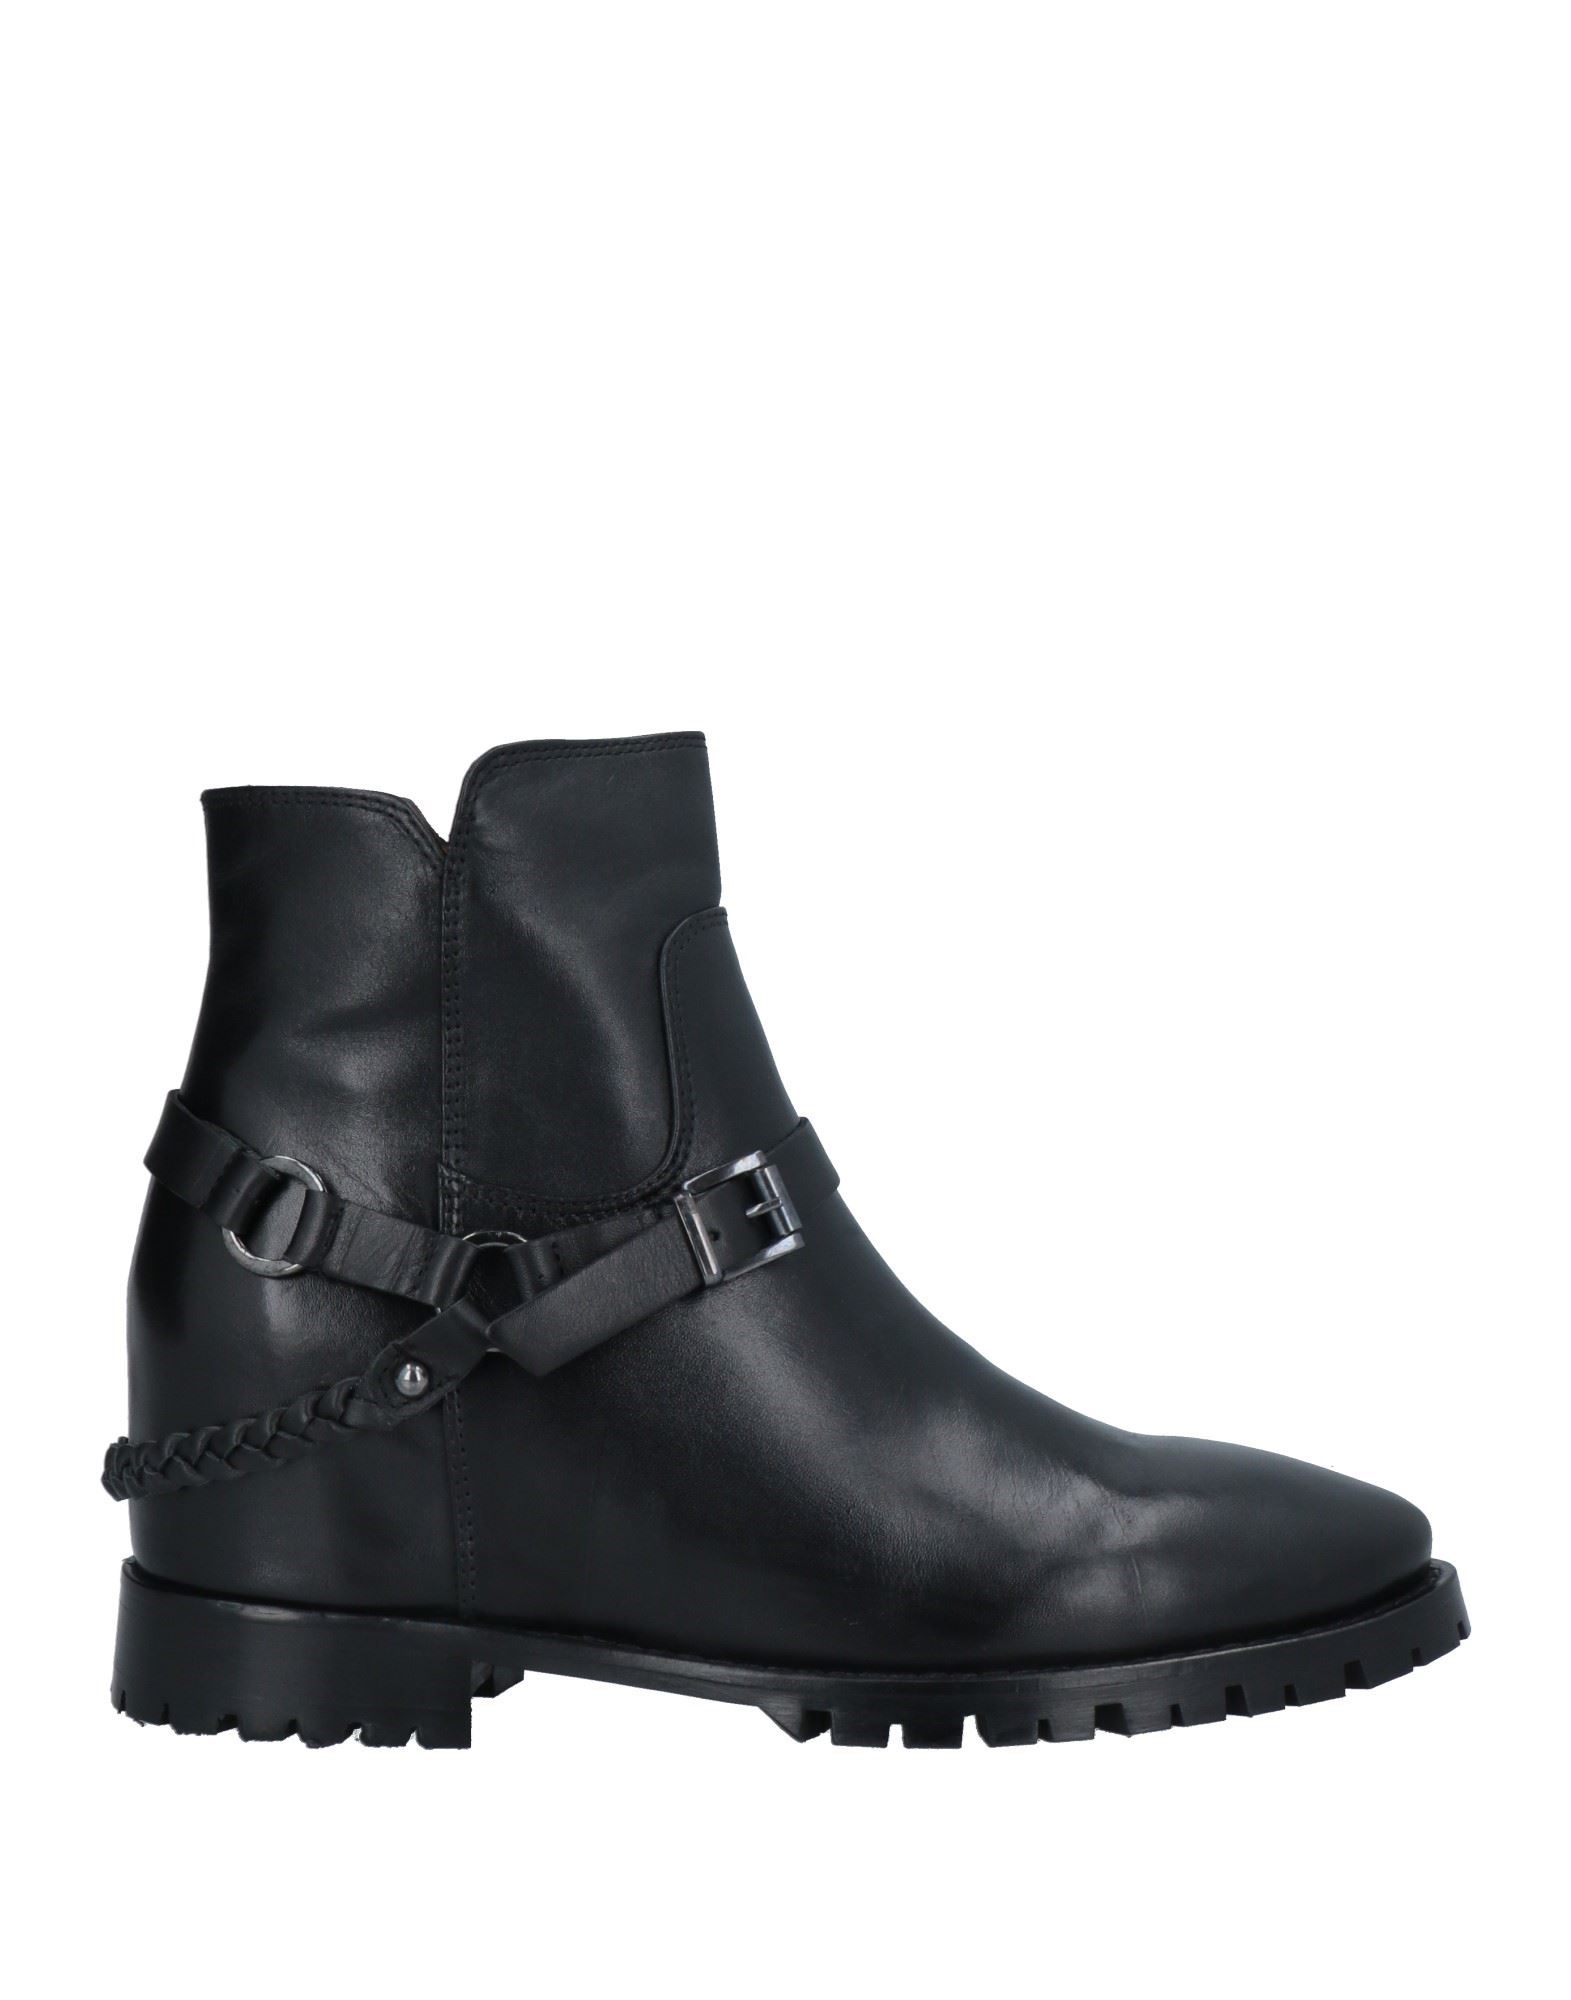 elegant black leather BN974-36 Details about   Women's shoes ALBANO 6 36 EU 